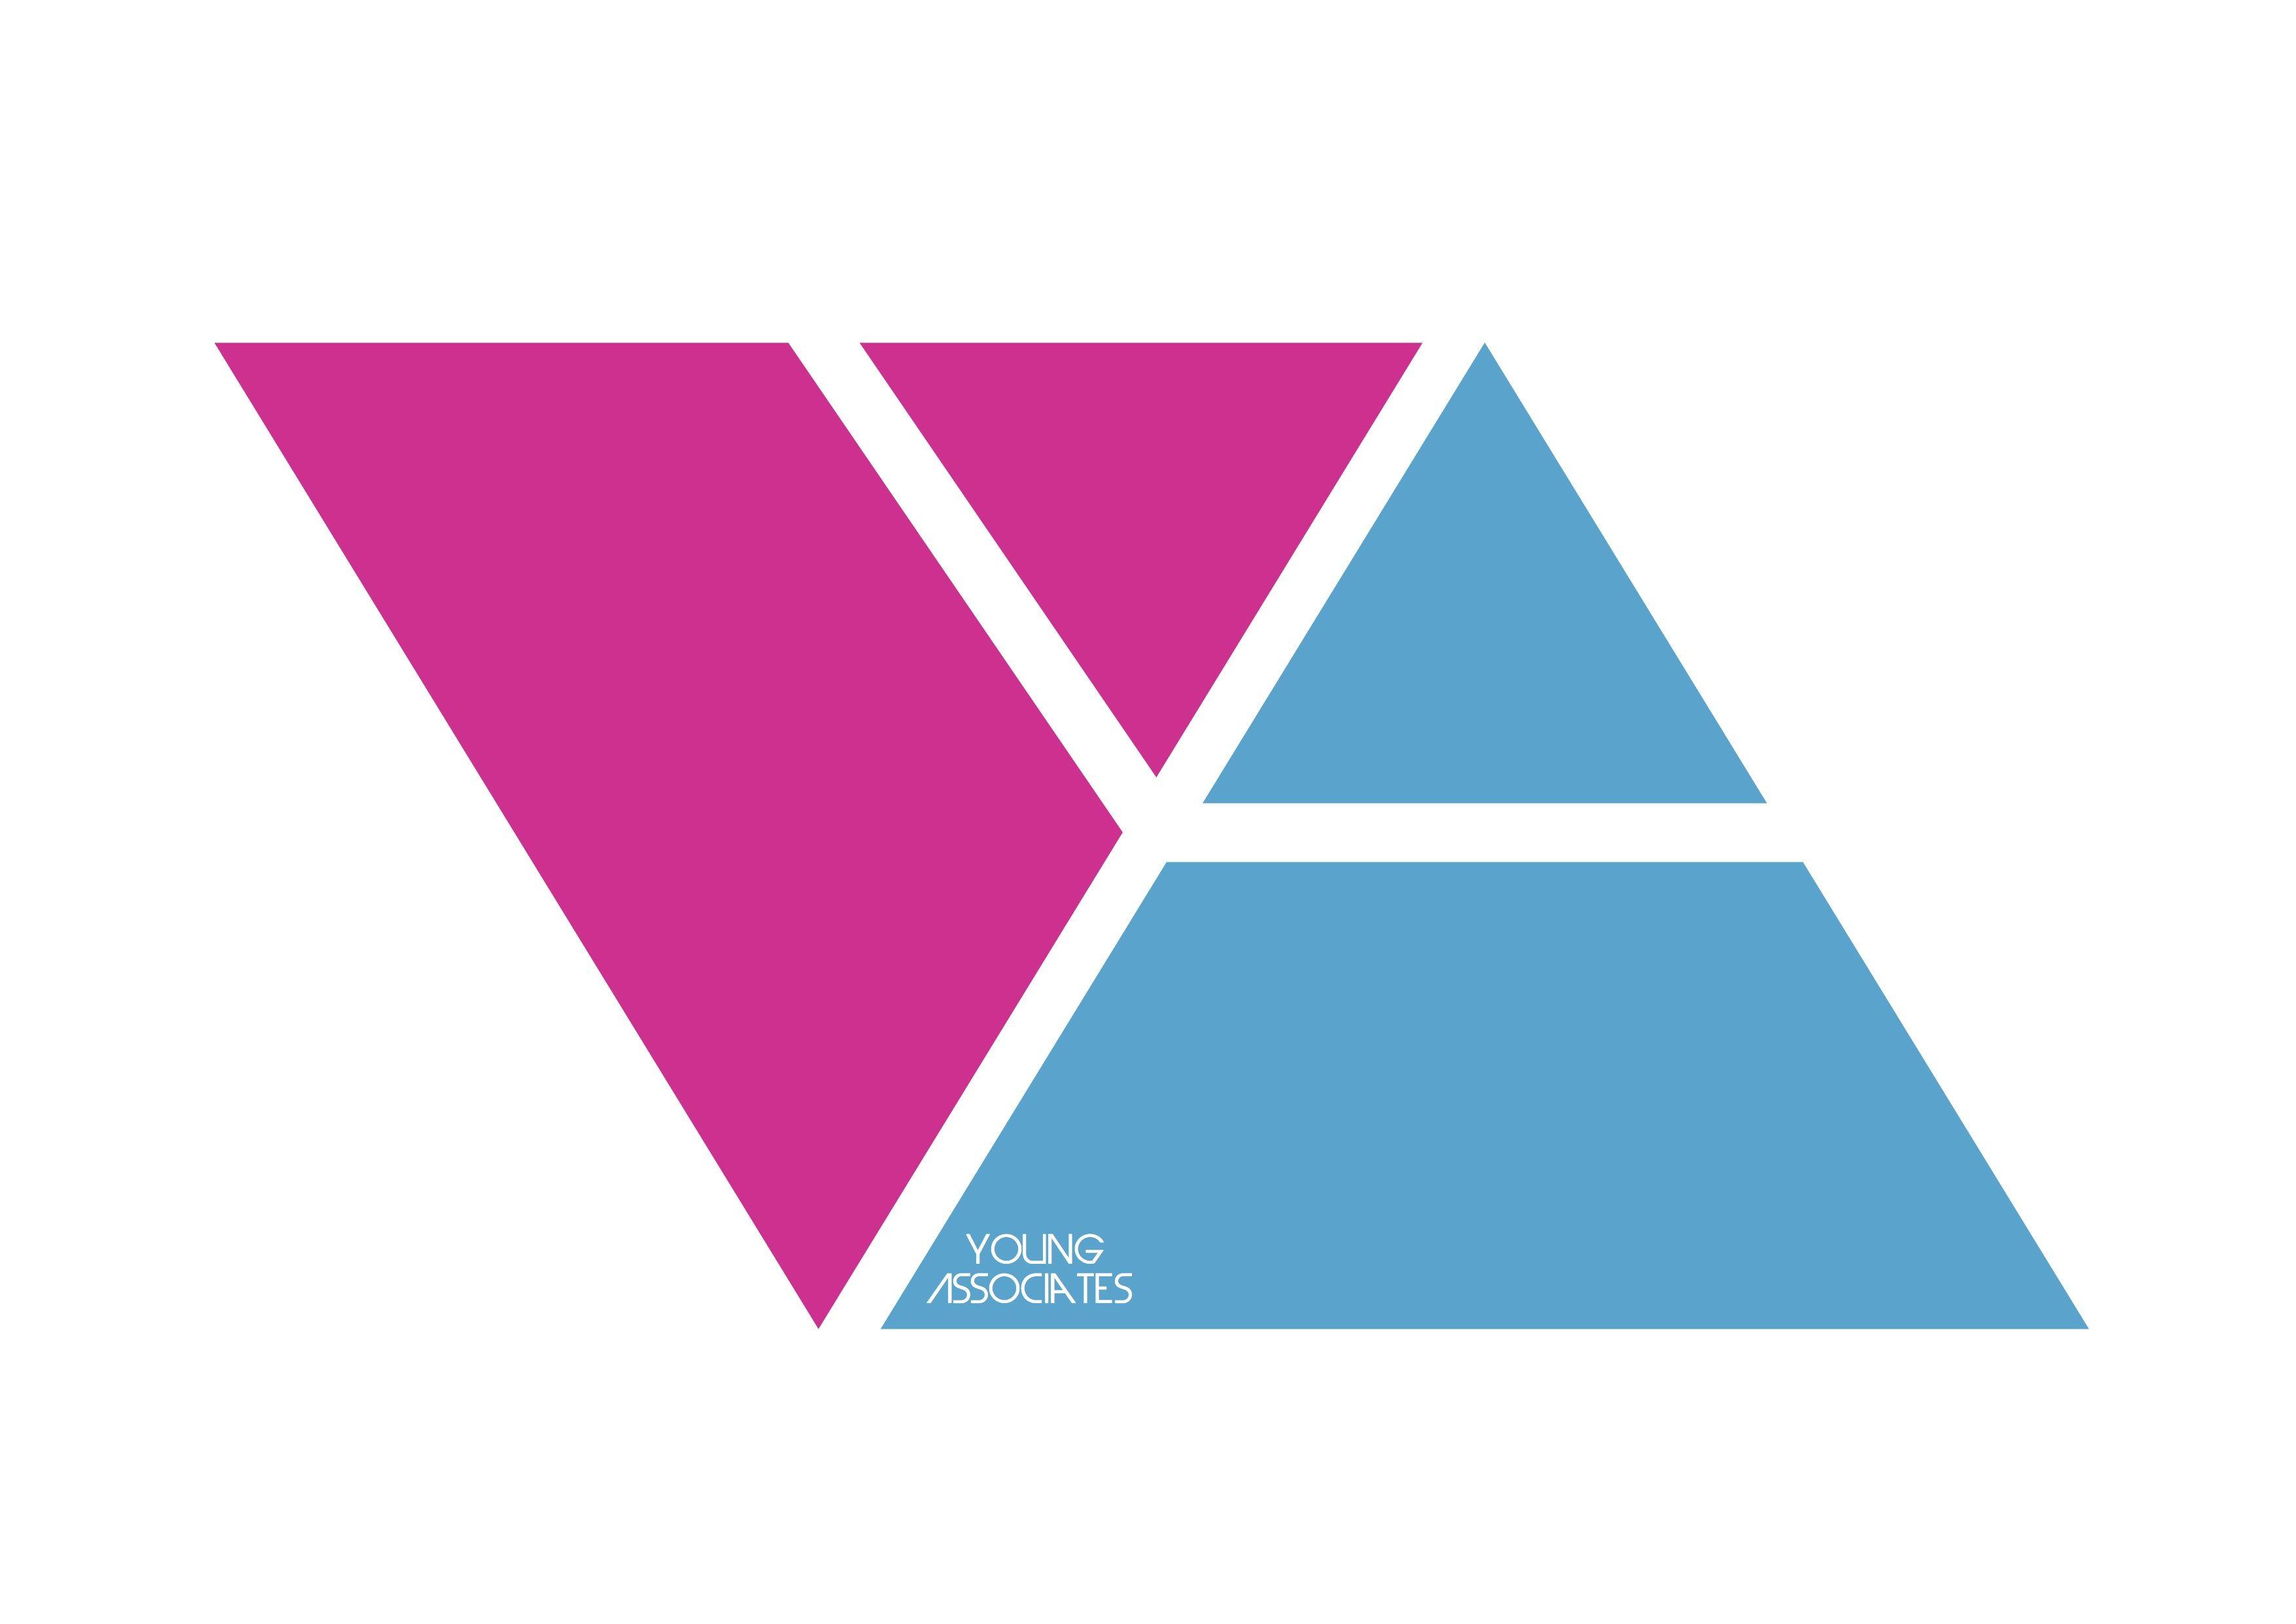 Two Triangle Logo - Young Associates logo_